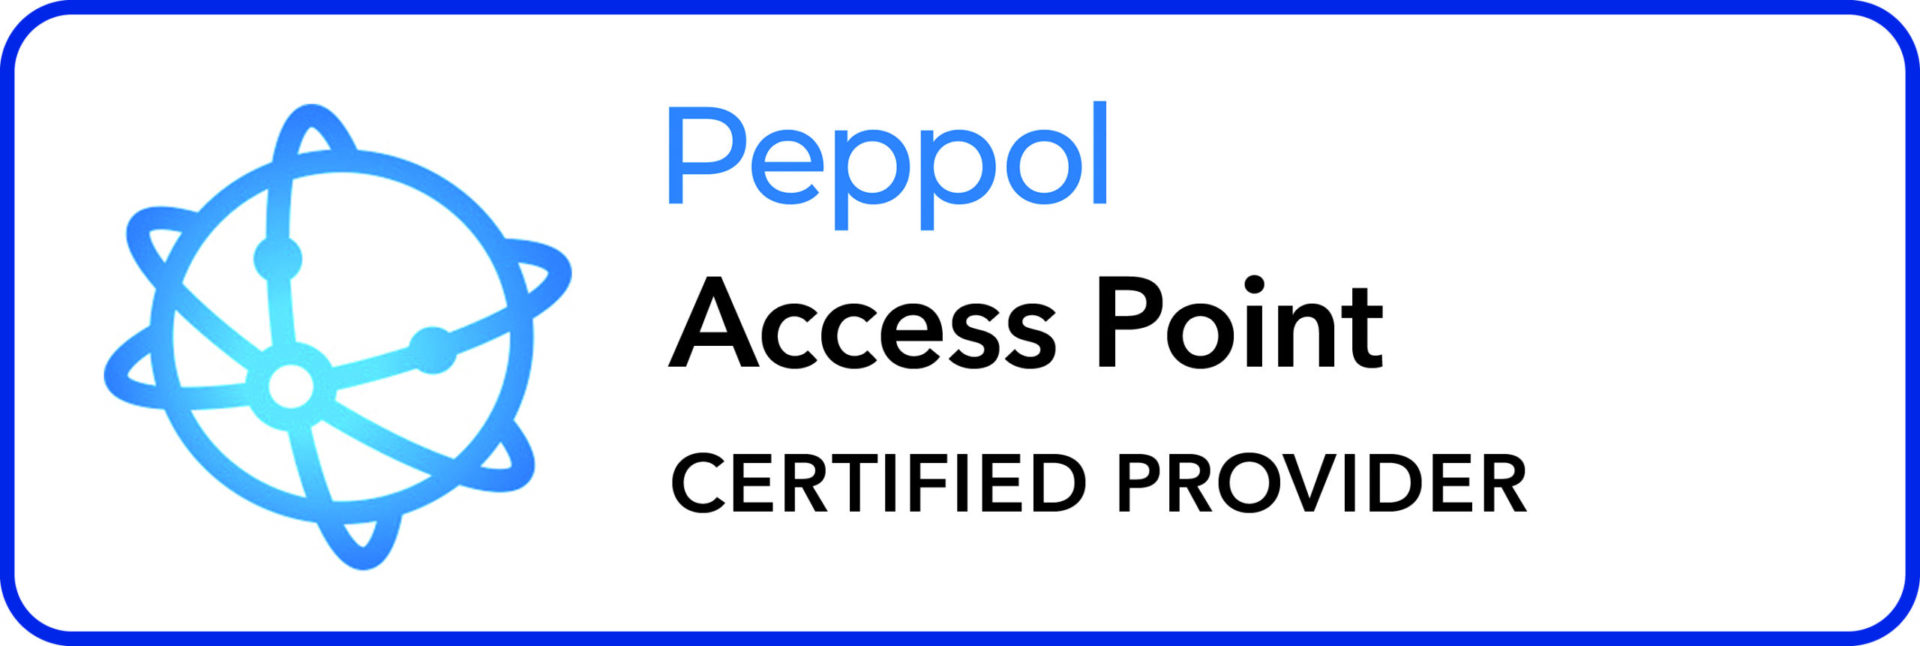 tradeinterop Peppol Access Point provider